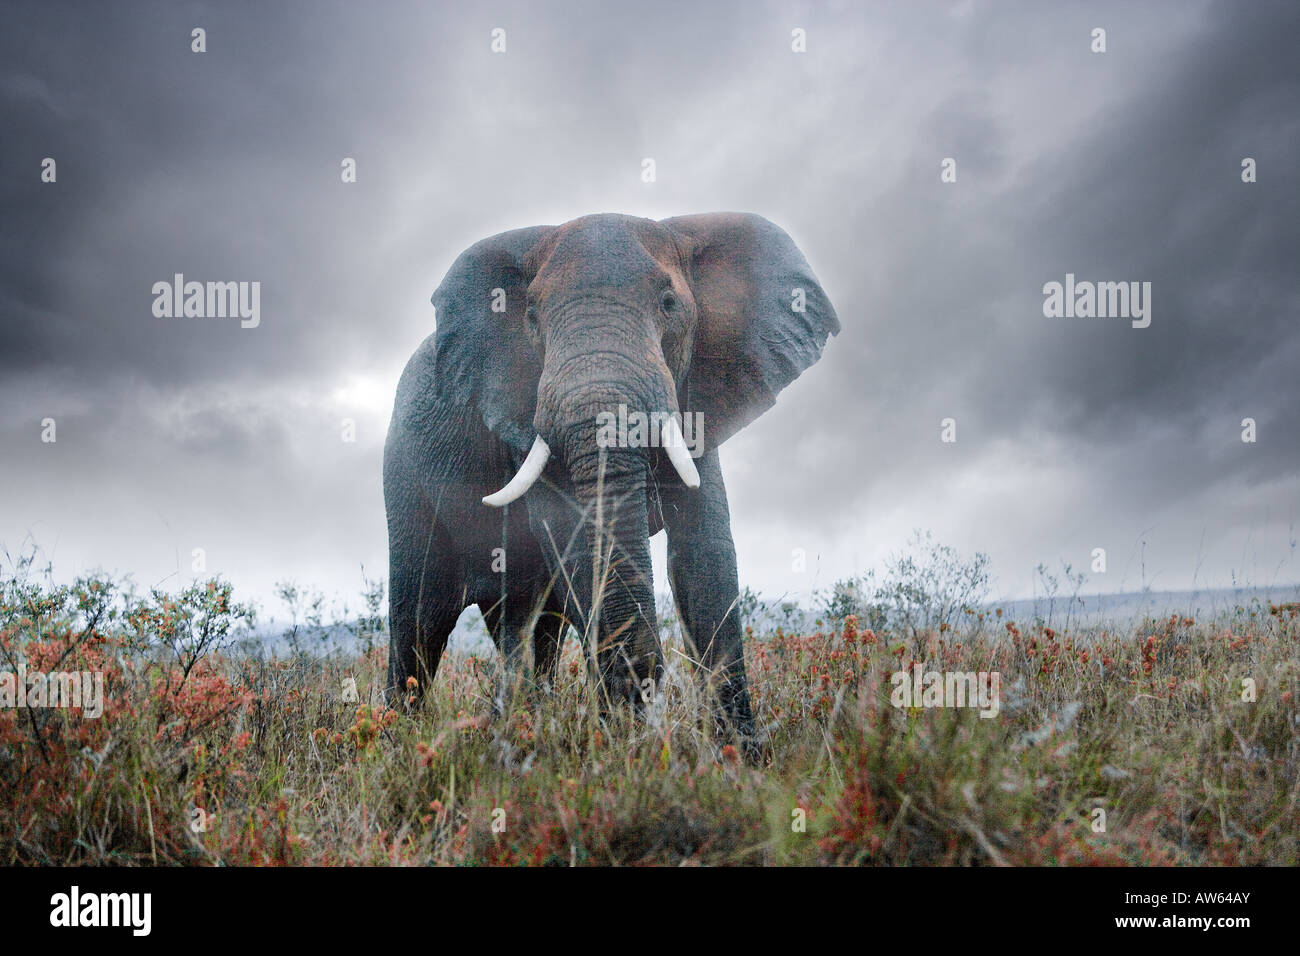 Bull elephant, Maasai Mara, Kenya Banque D'Images